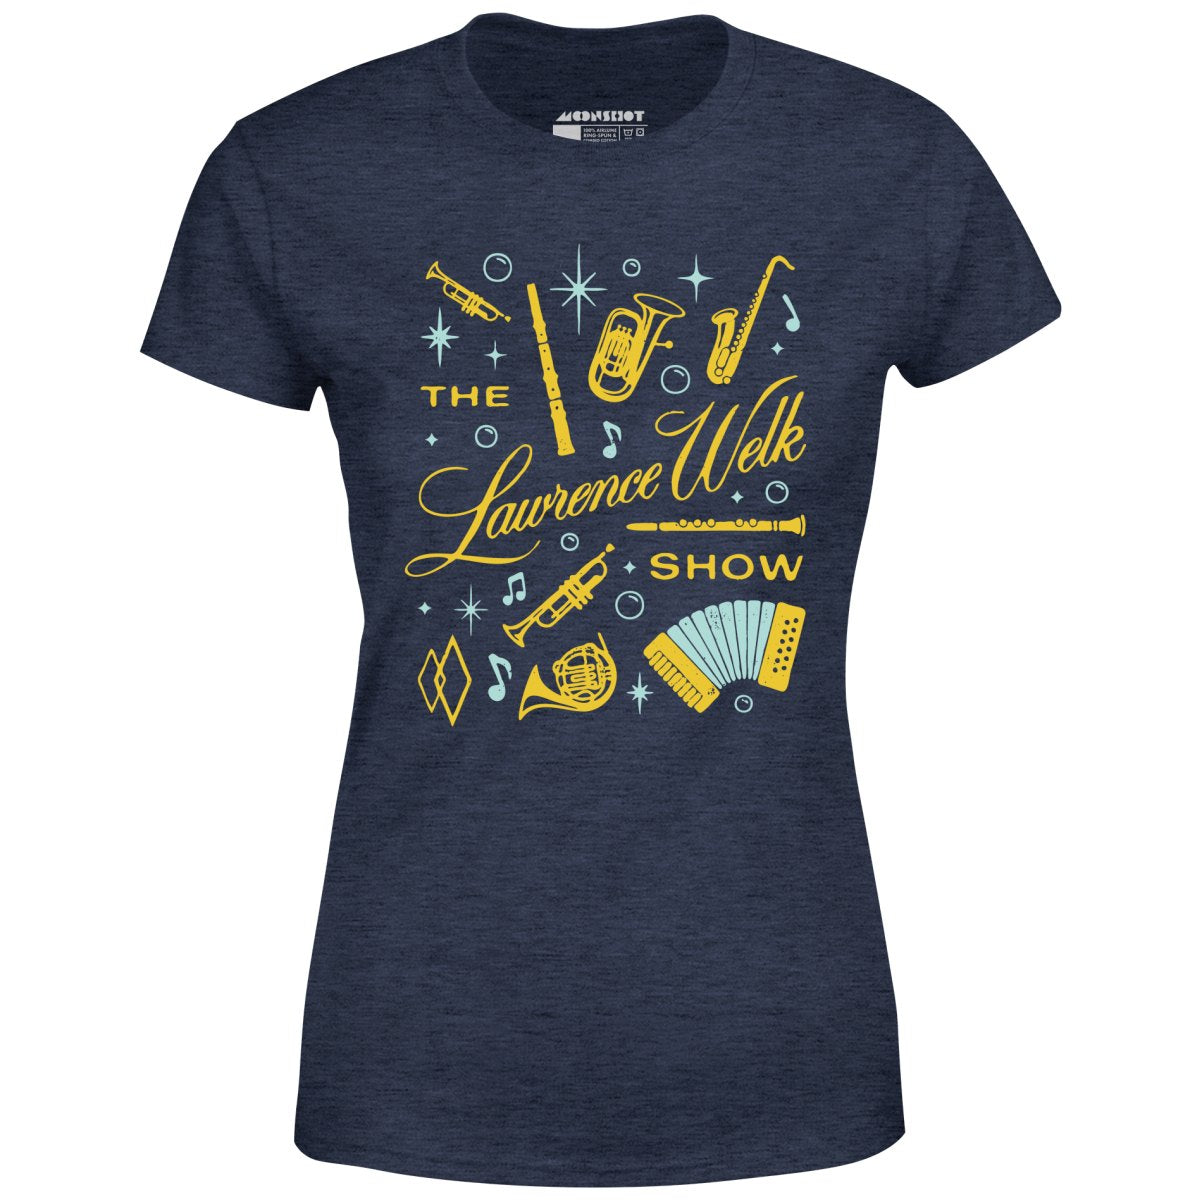 The Lawrence Welk Show - Women's T-Shirt